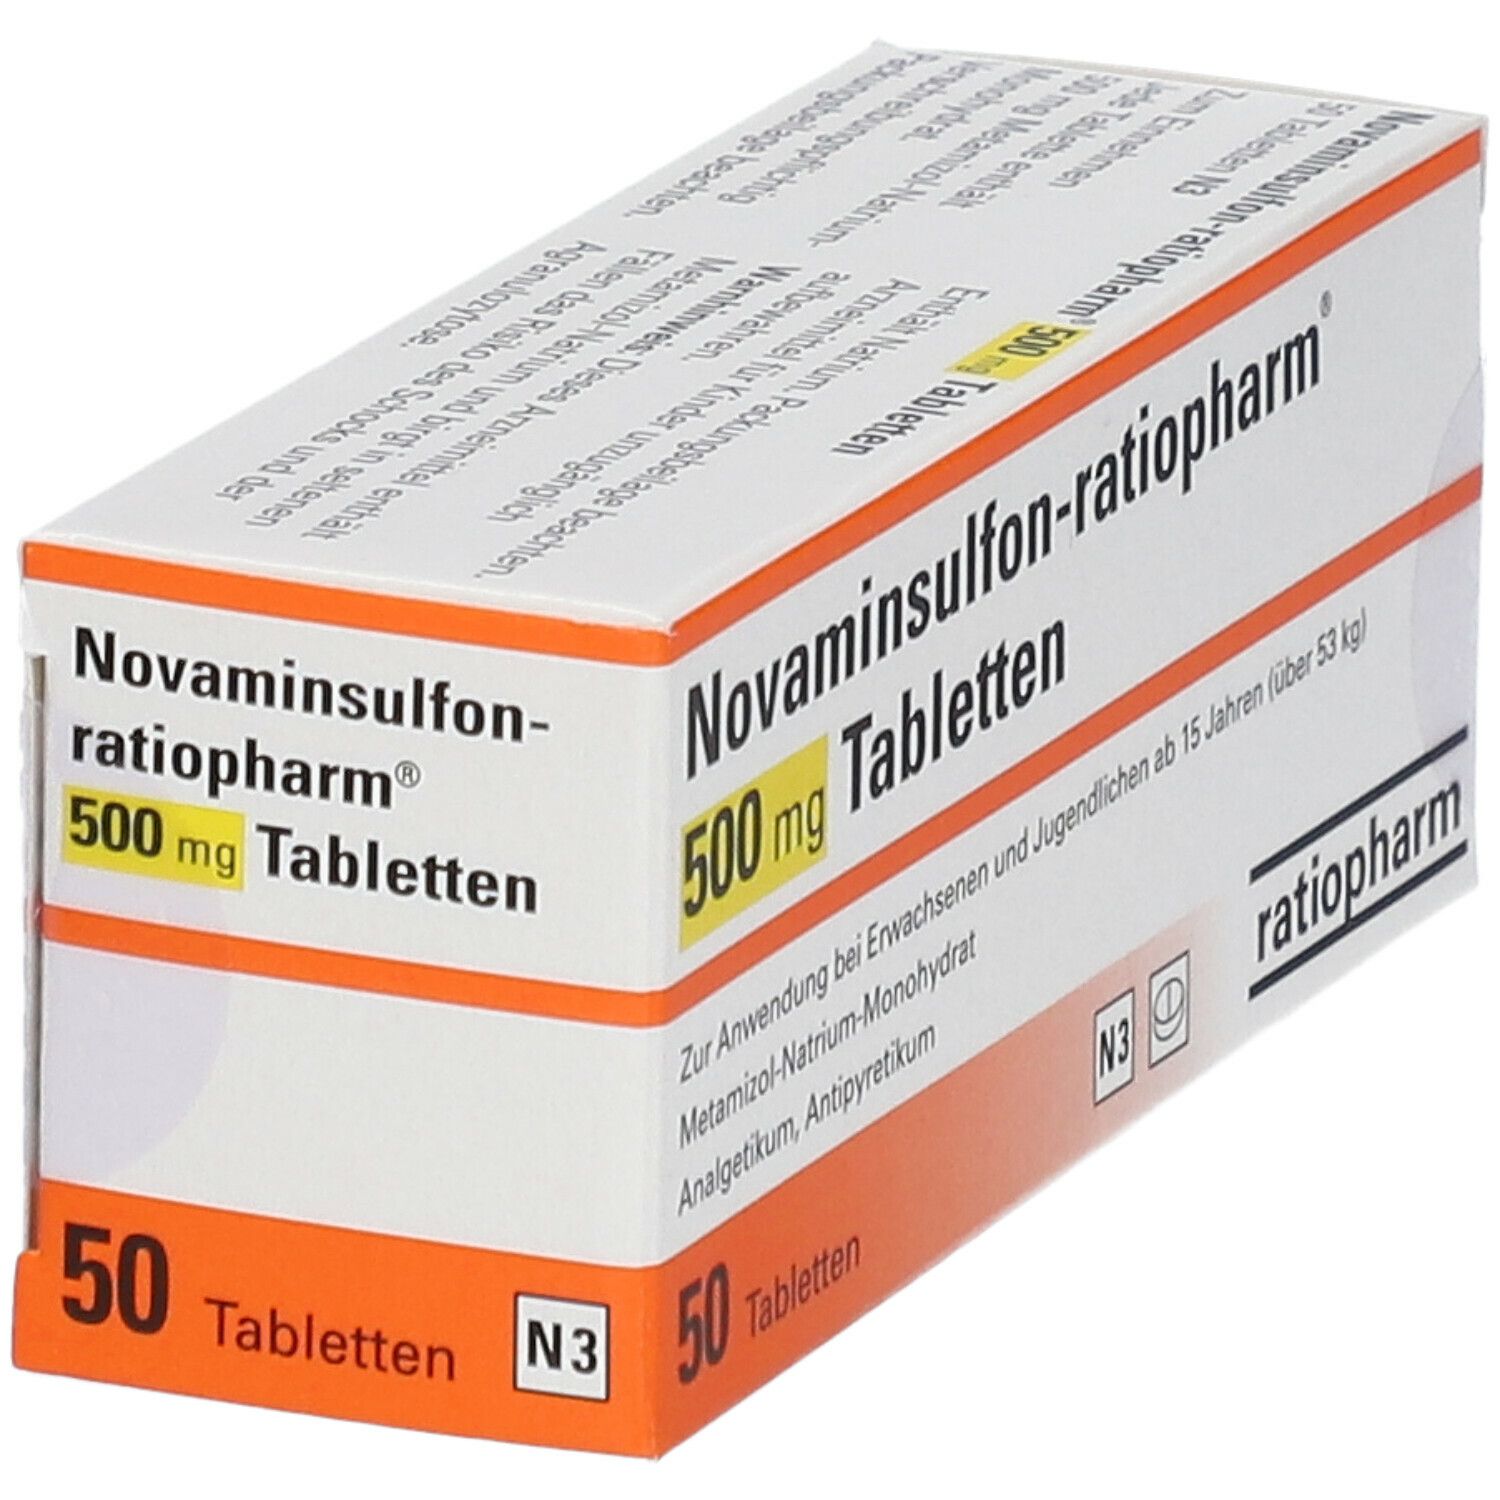 Novaminsulfon-ratiopharm ® 500 mg.